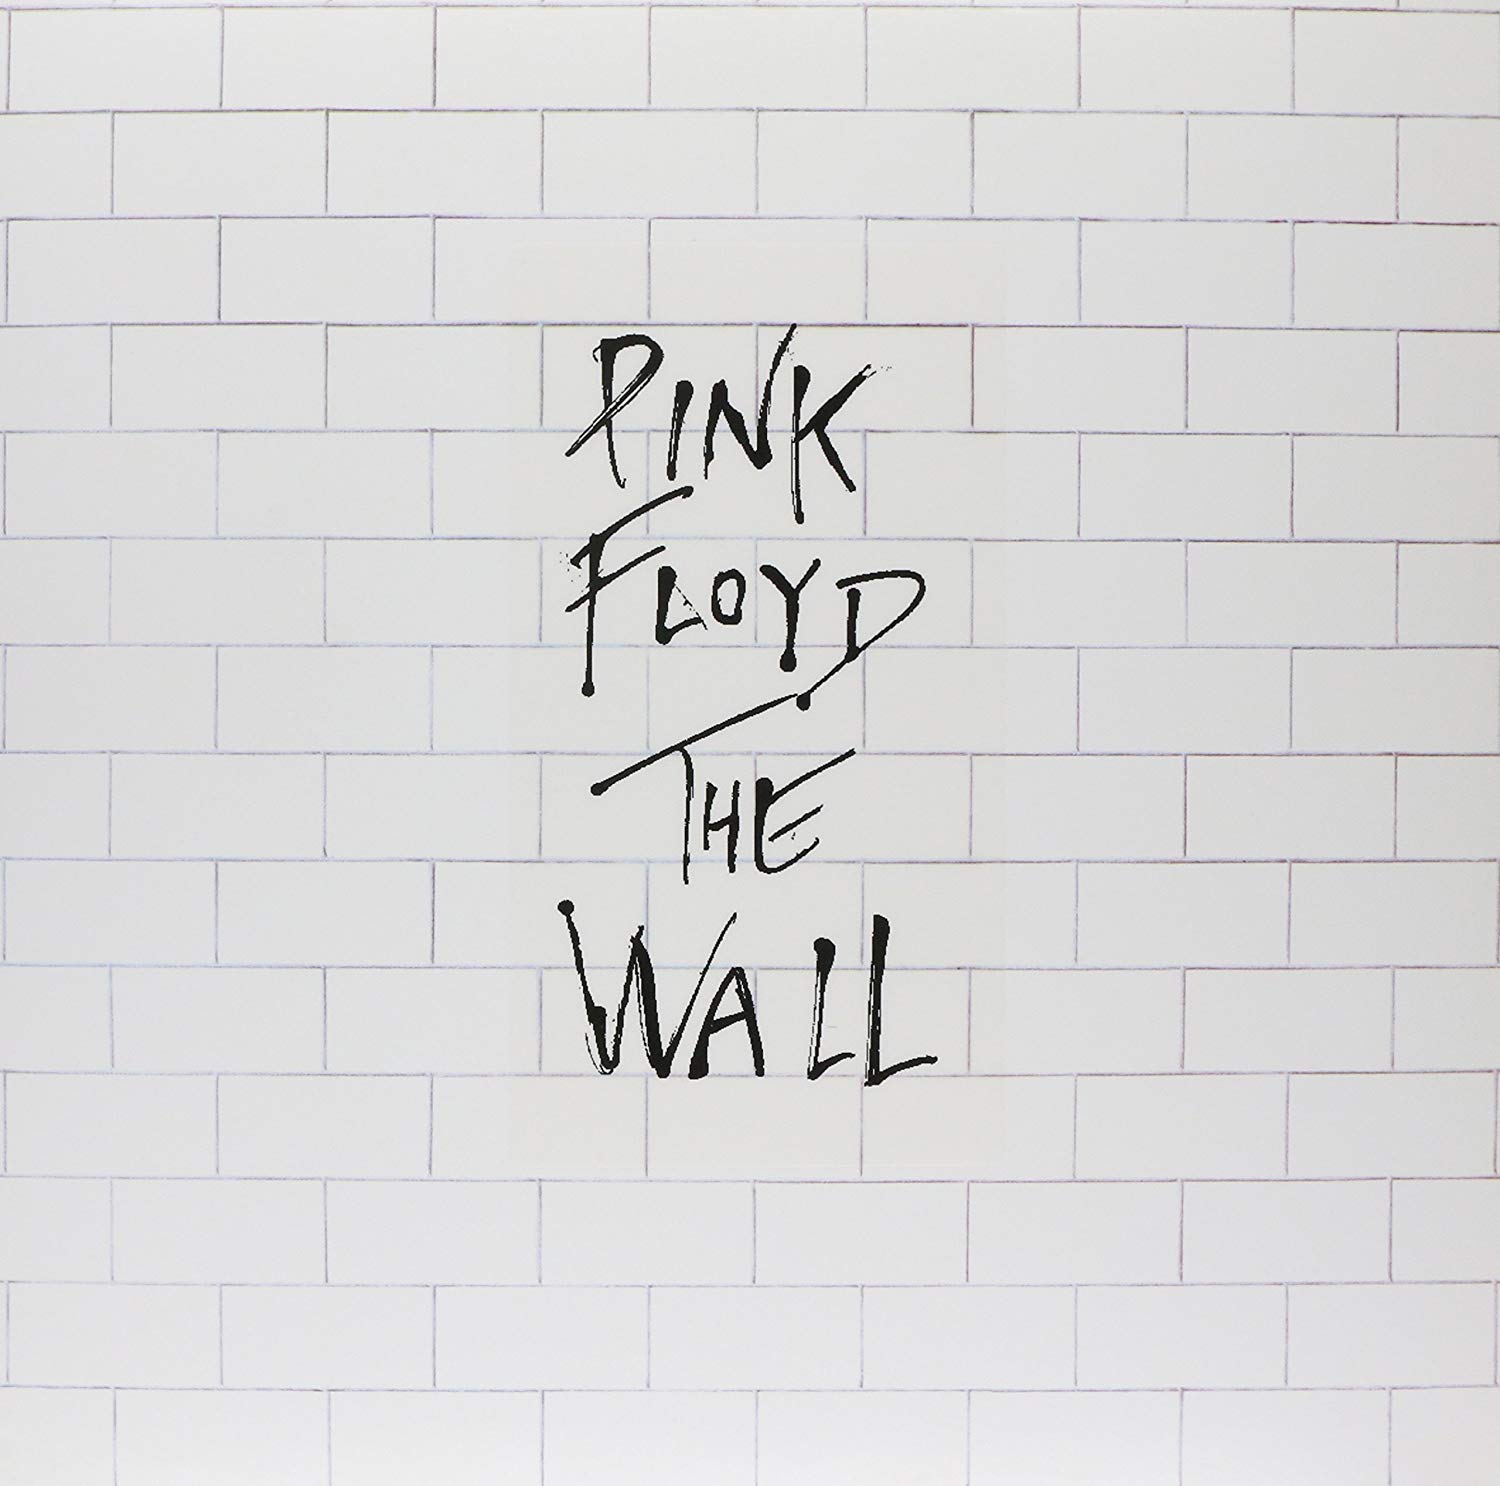 Pink floyd the wall album lyrics - lenabikini